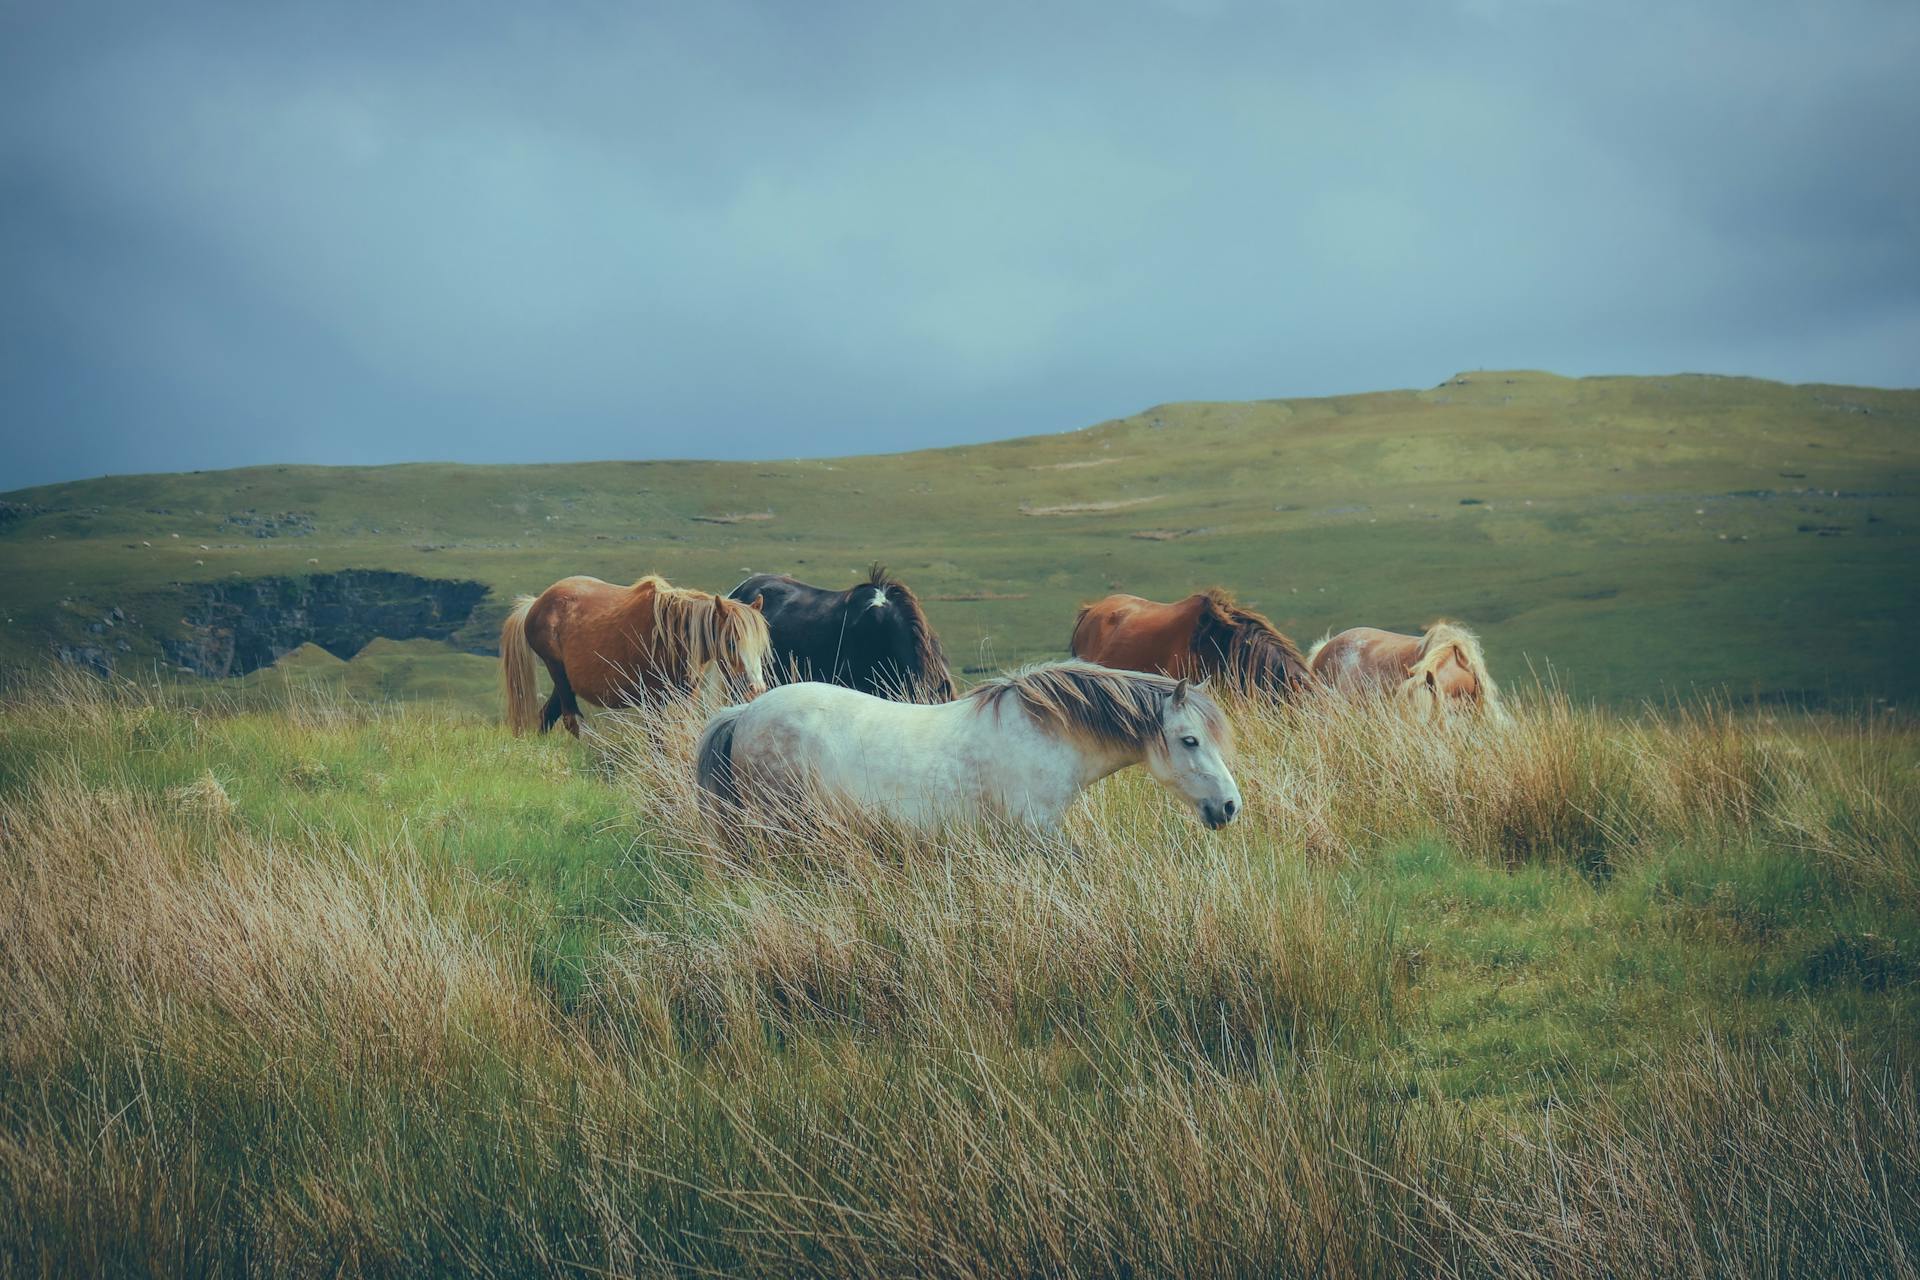 Herd of Horses on Pasture